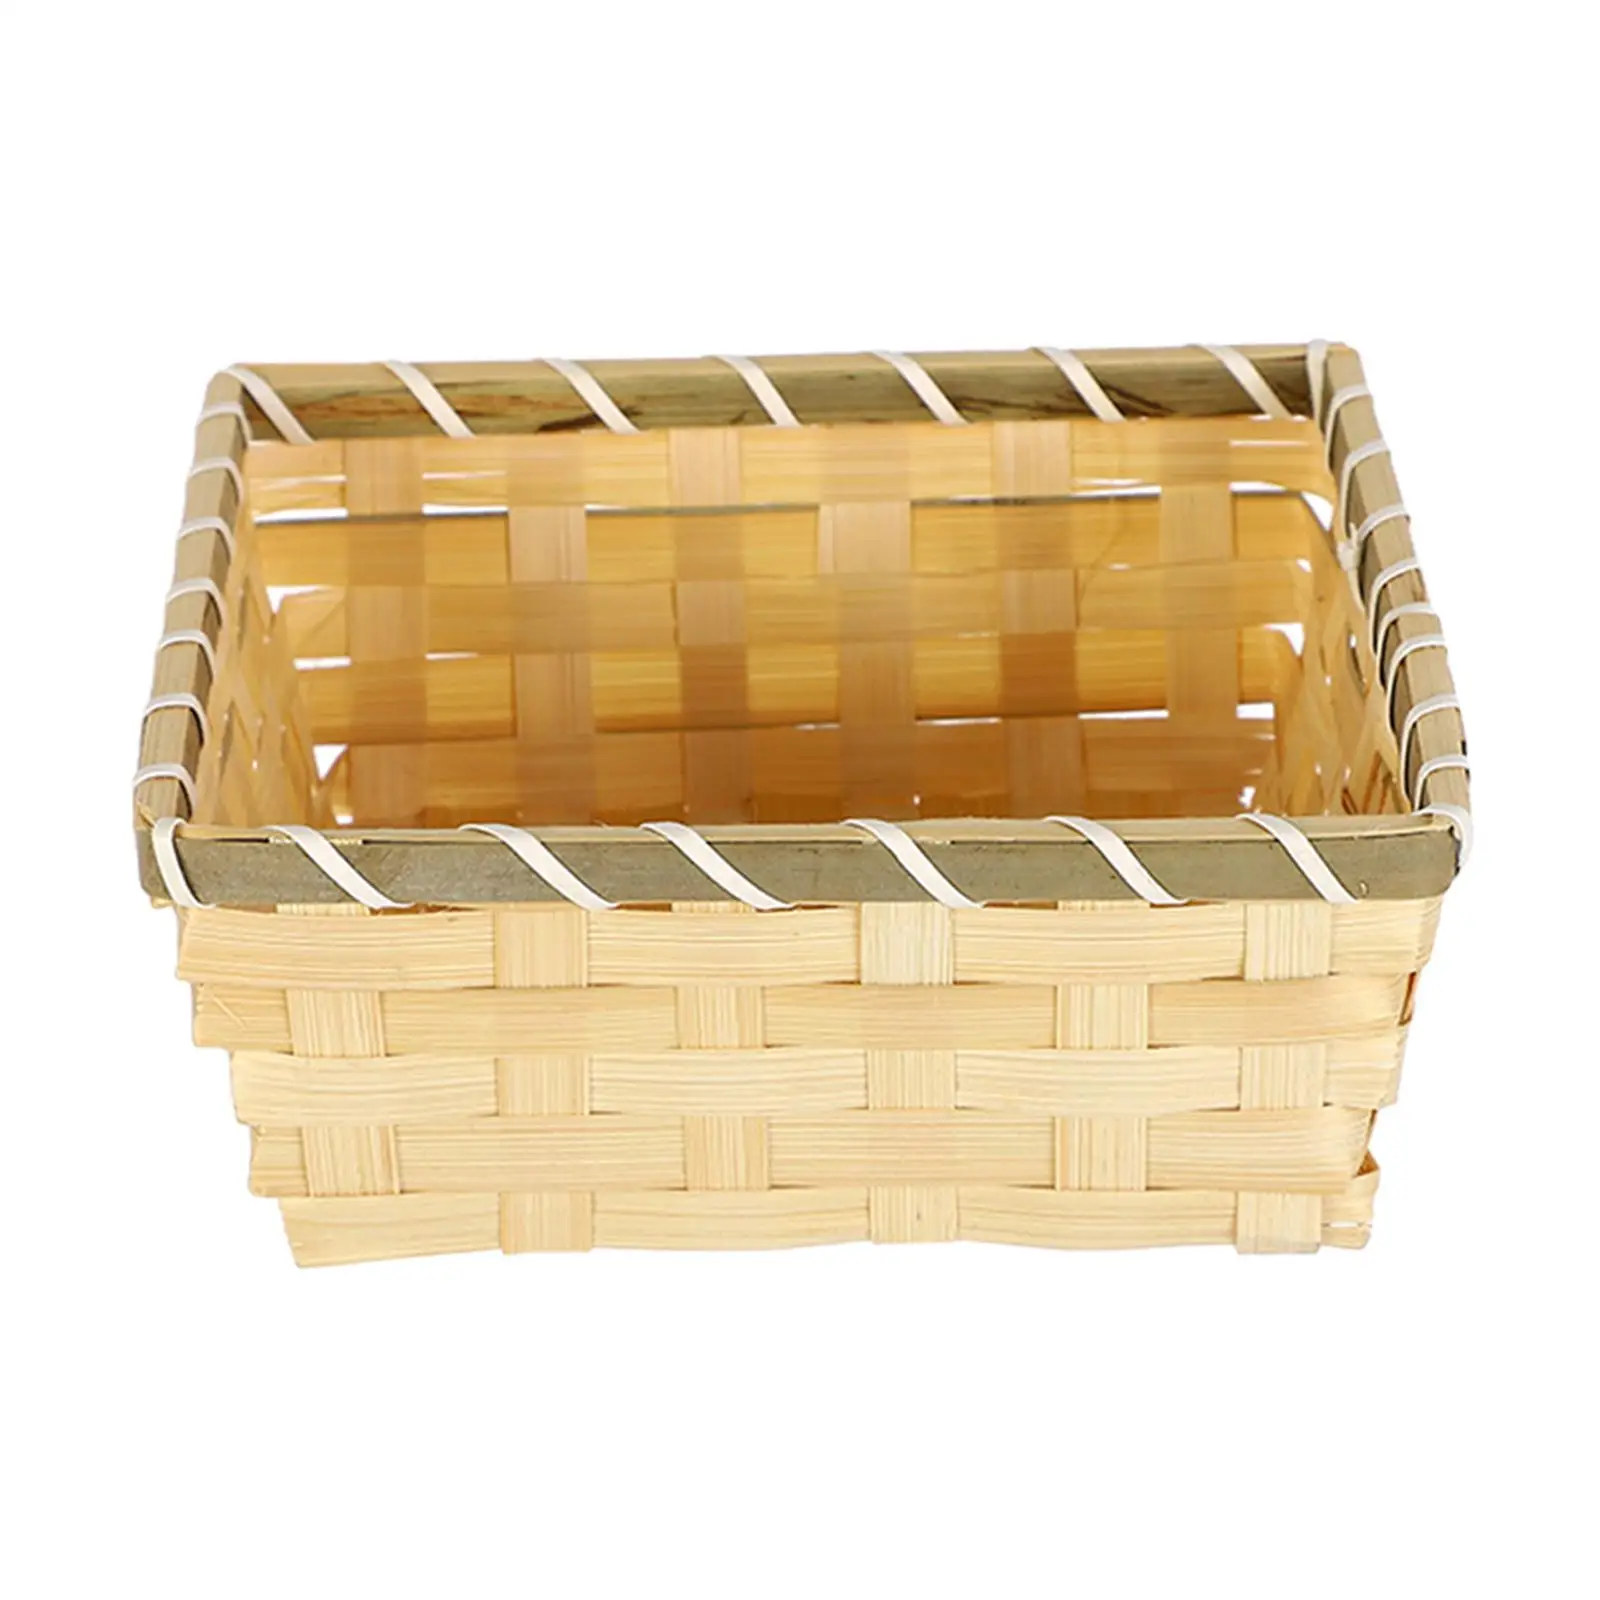 Woven Fruit Basket Snacks Sundries Egg Hadewoven Organizer Bamboo Storage Bin for Desktop Cabinets Laundry Room Closets Bathroom